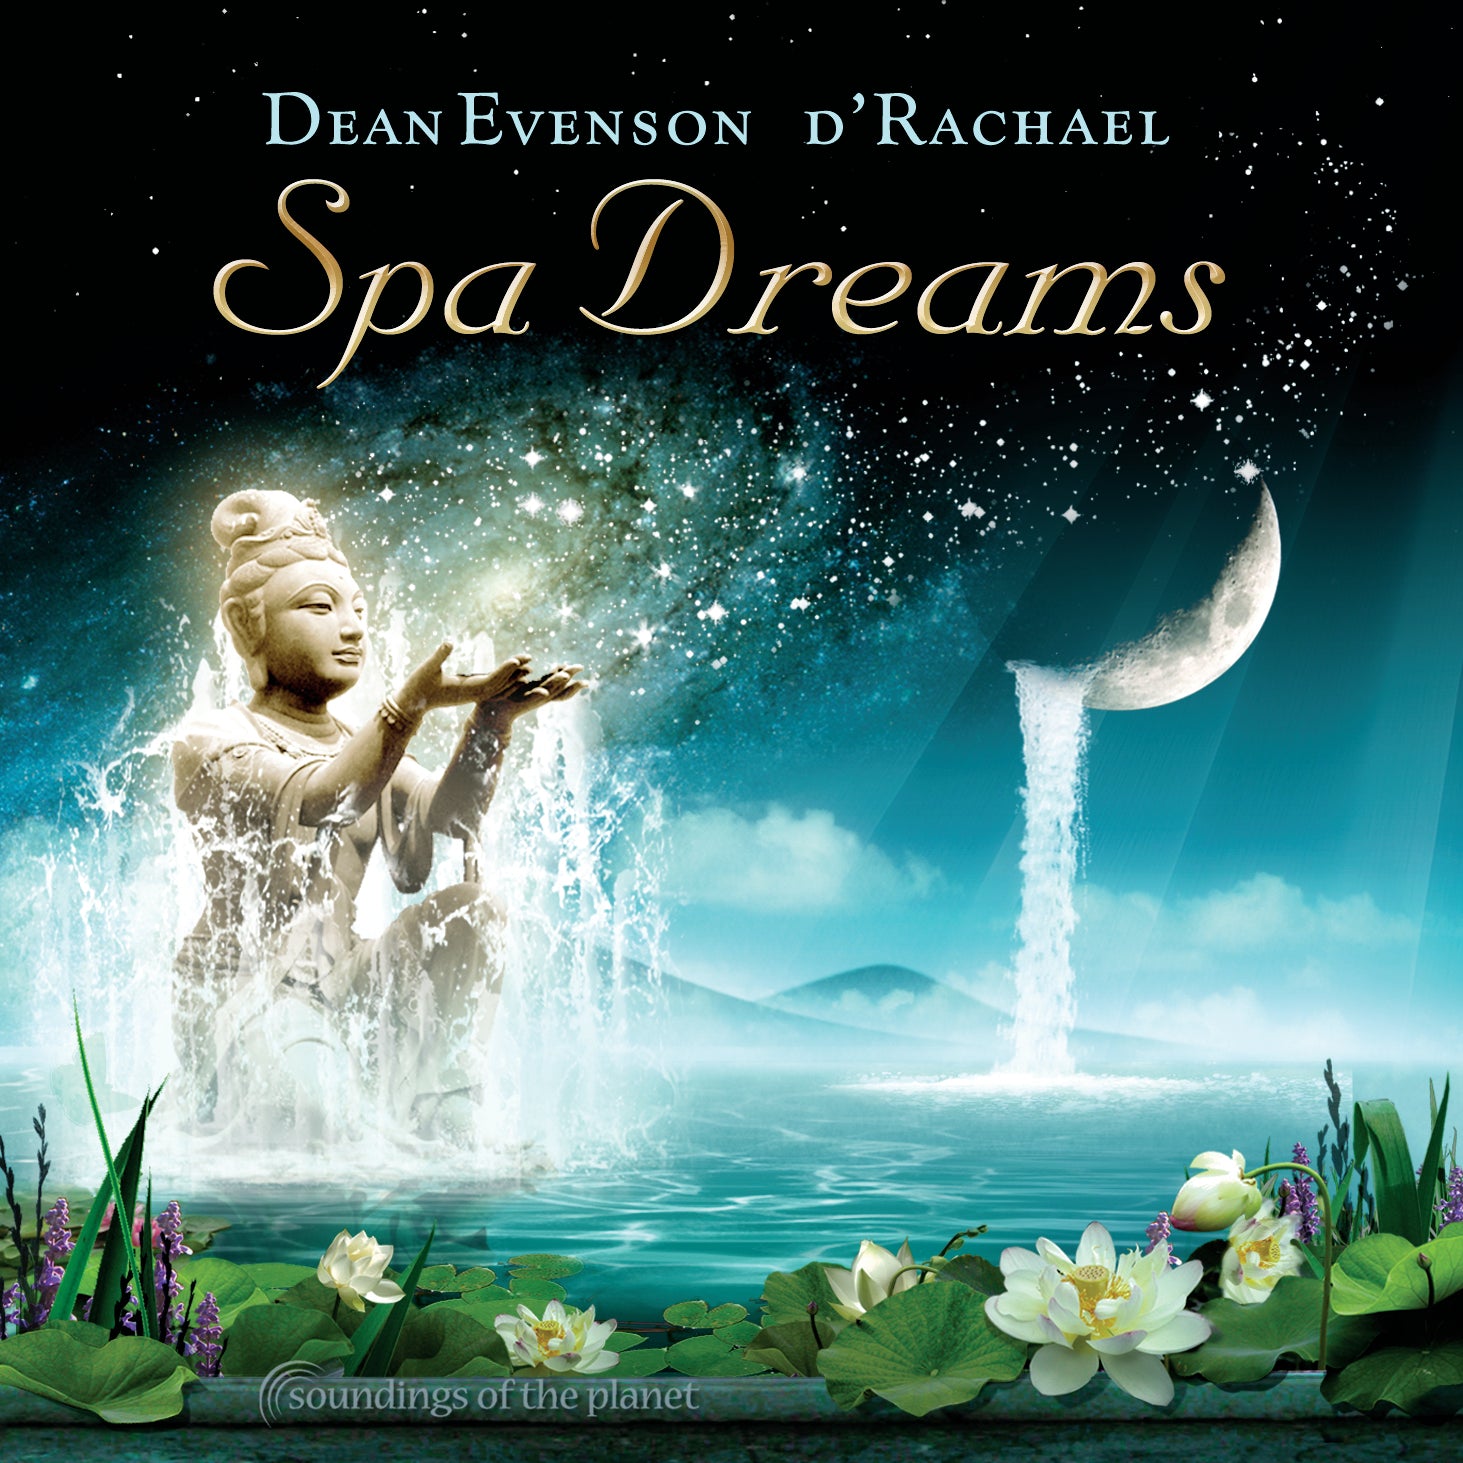 Soundings_7207_Spa_Dreams Dean Evenson d'Rachael